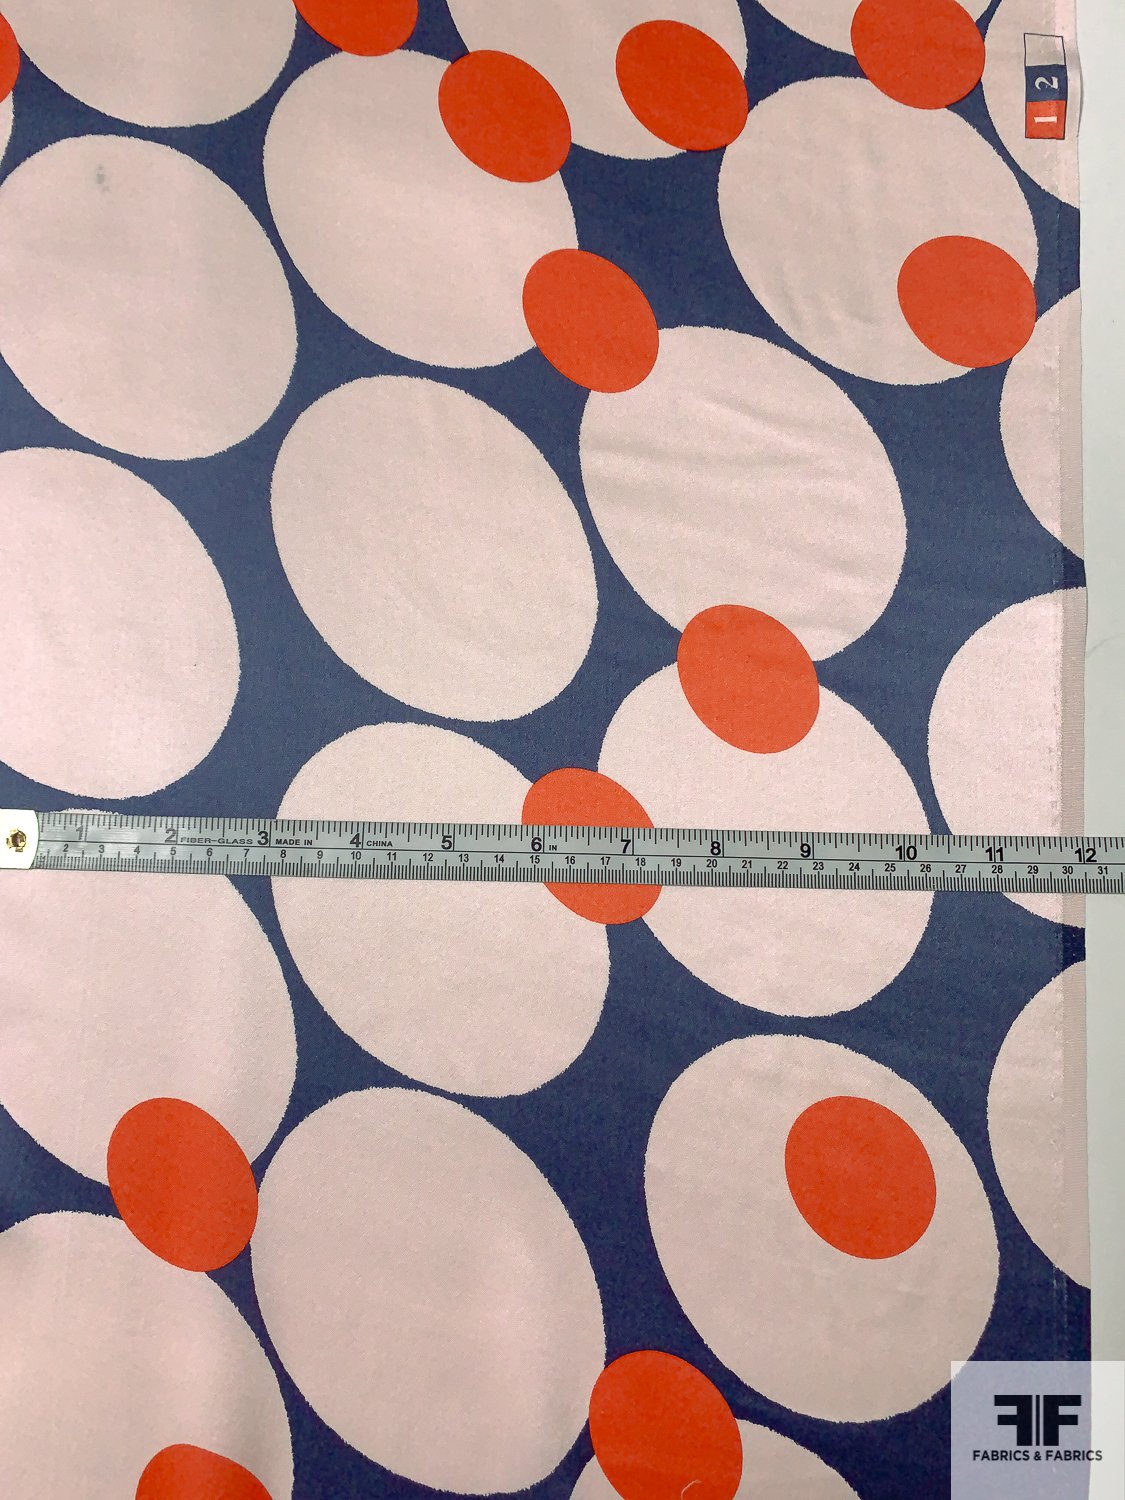 Circle Theme Printed Silk Charmeuse - Lightest Blush / Blue-Grey / Orange